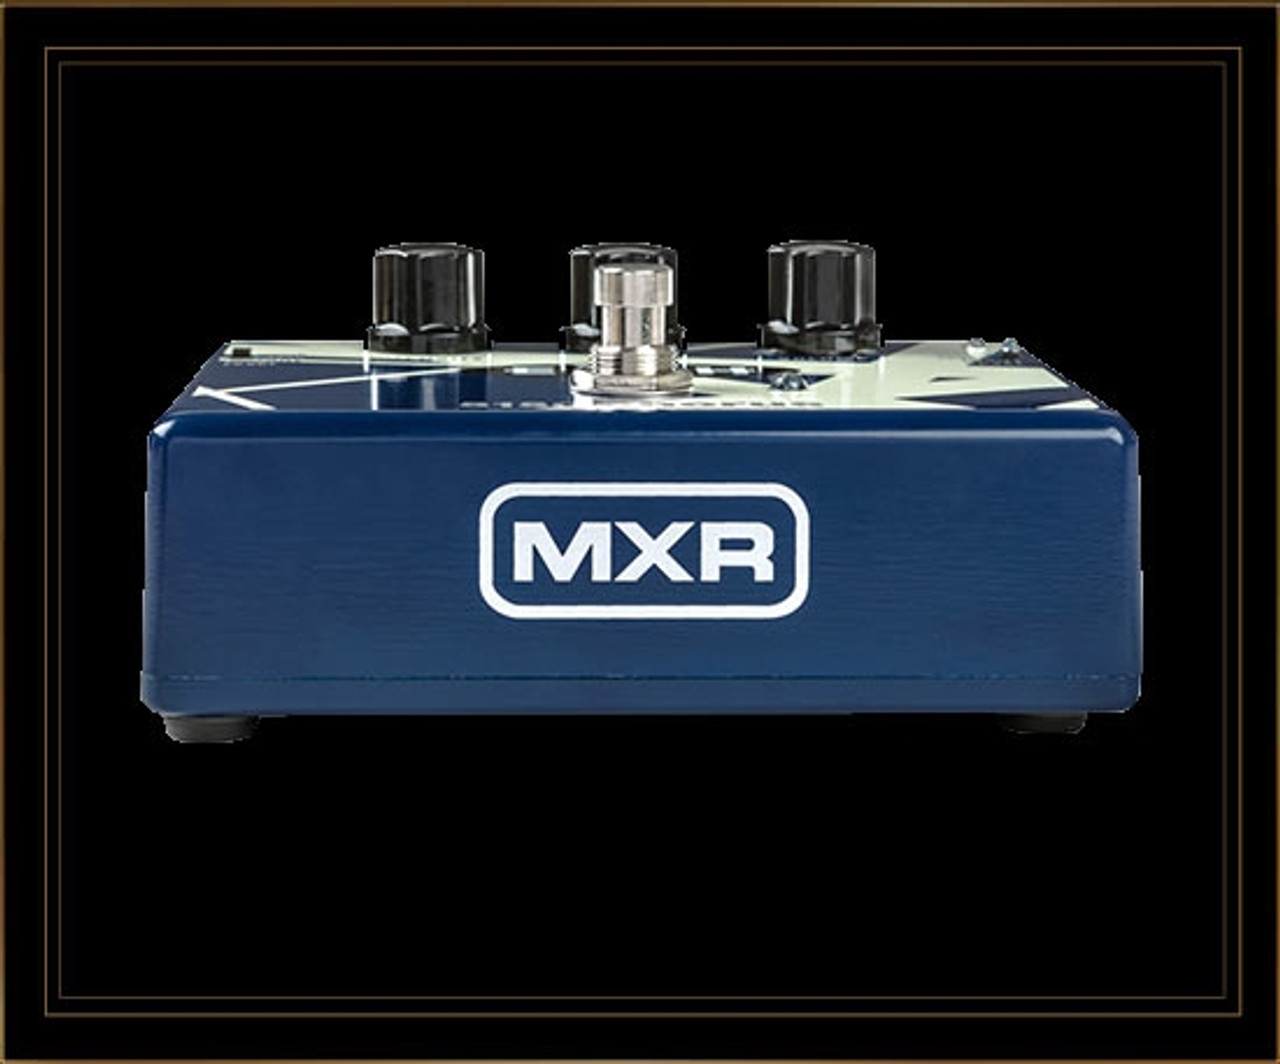 MXR EVH 5150 Chorus Pedal